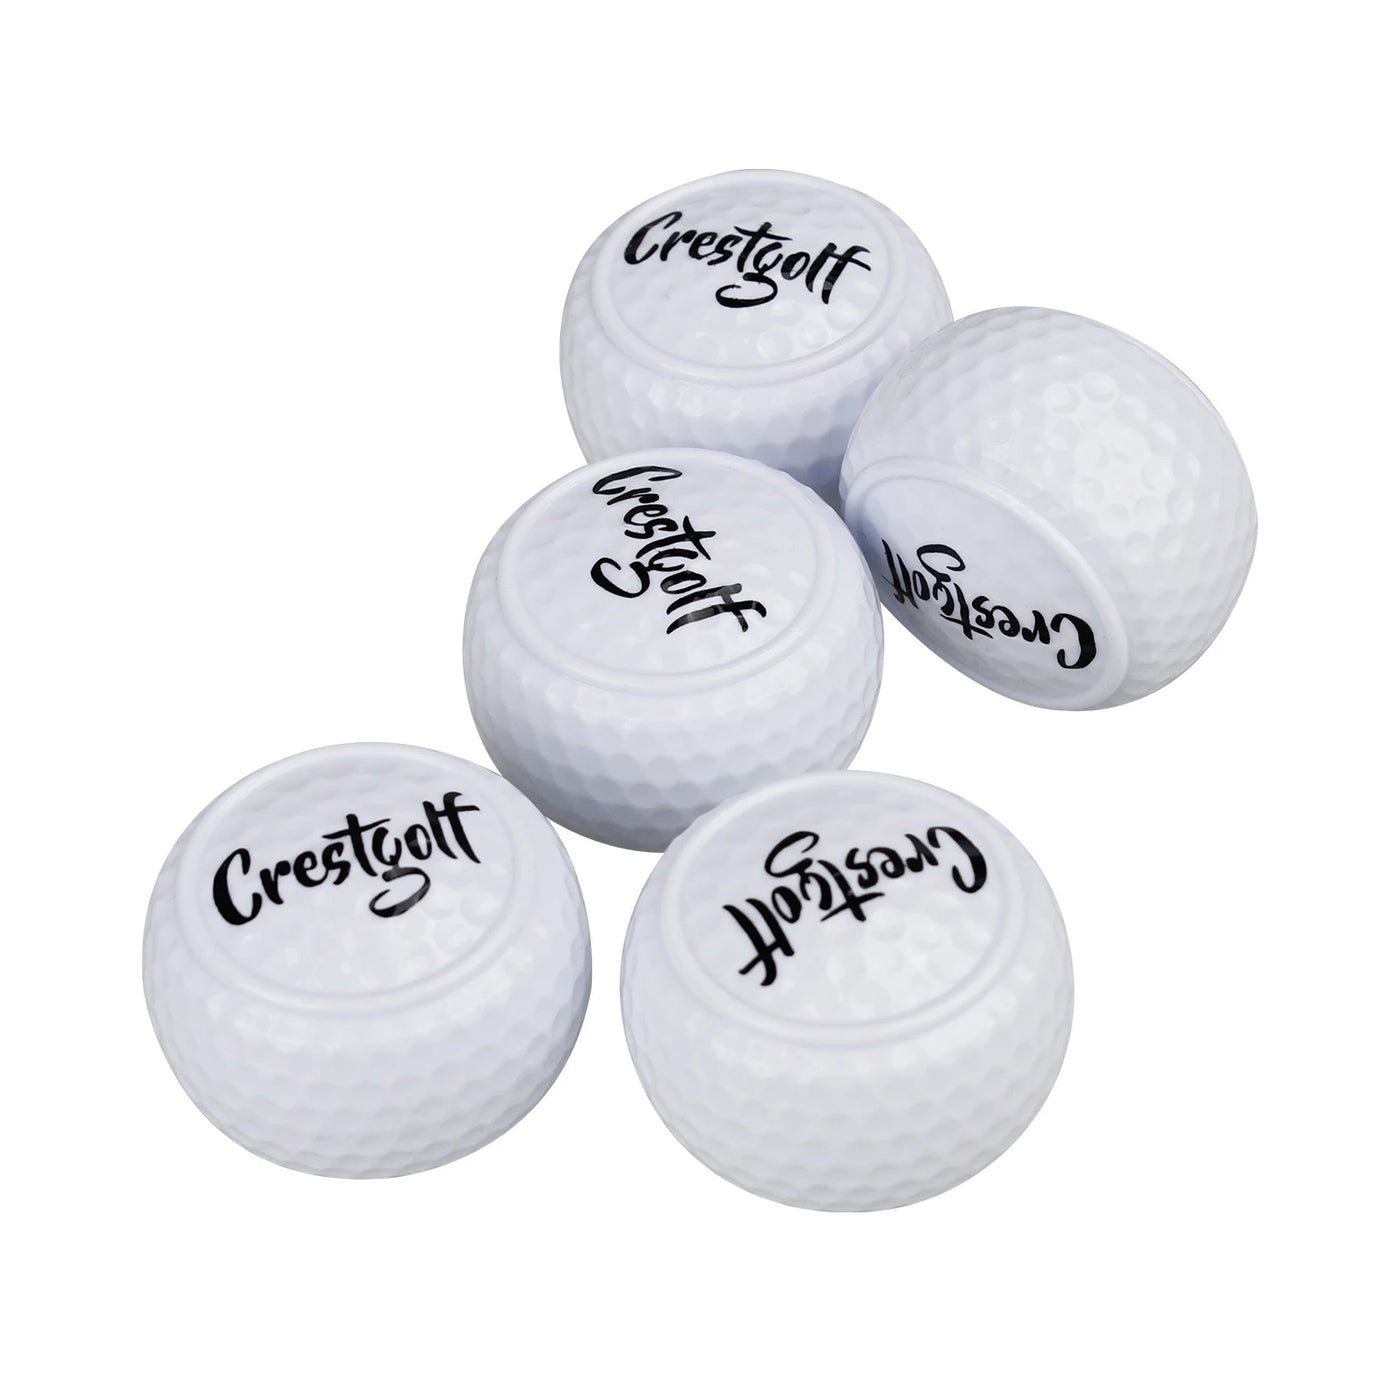 CRESTGOLF - flat golf balls for putting practice | set of 5